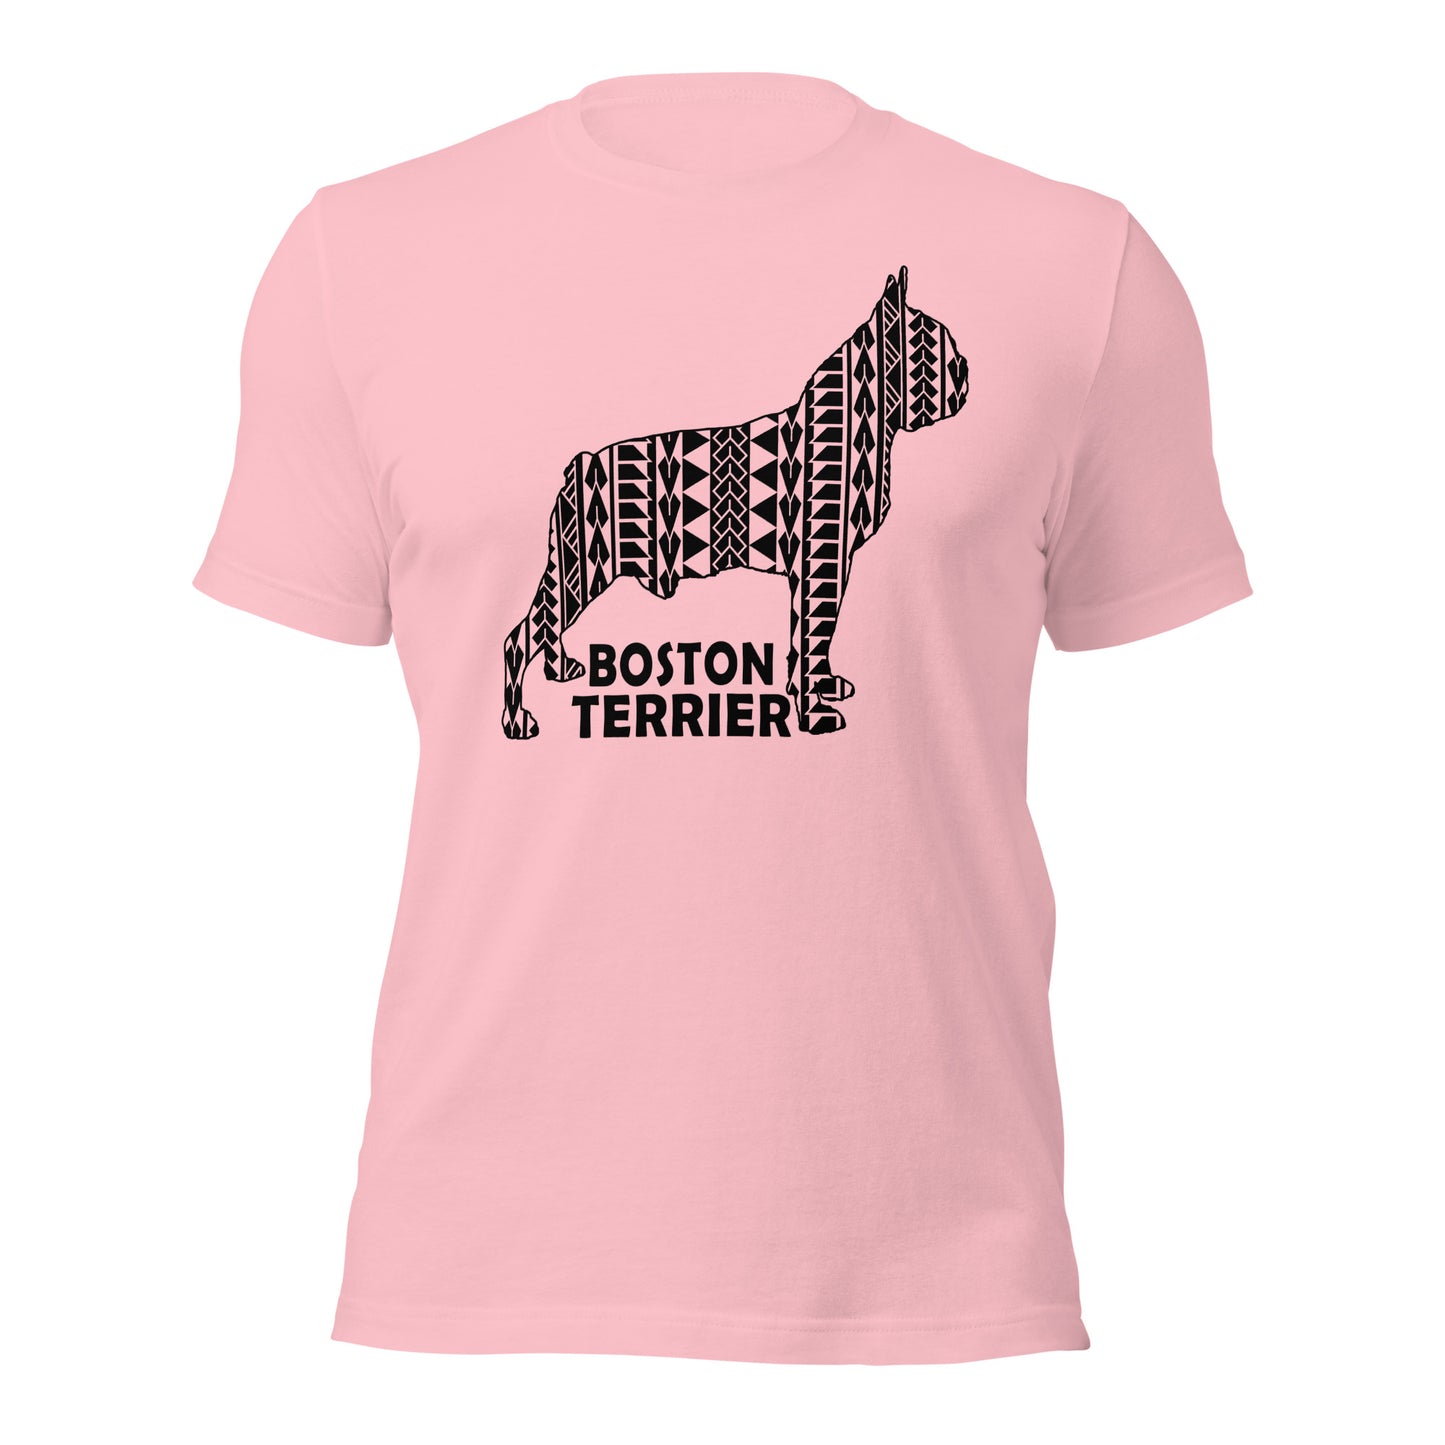 Boston Terrier Polynesian t-shirt pink by Dog Artistry.